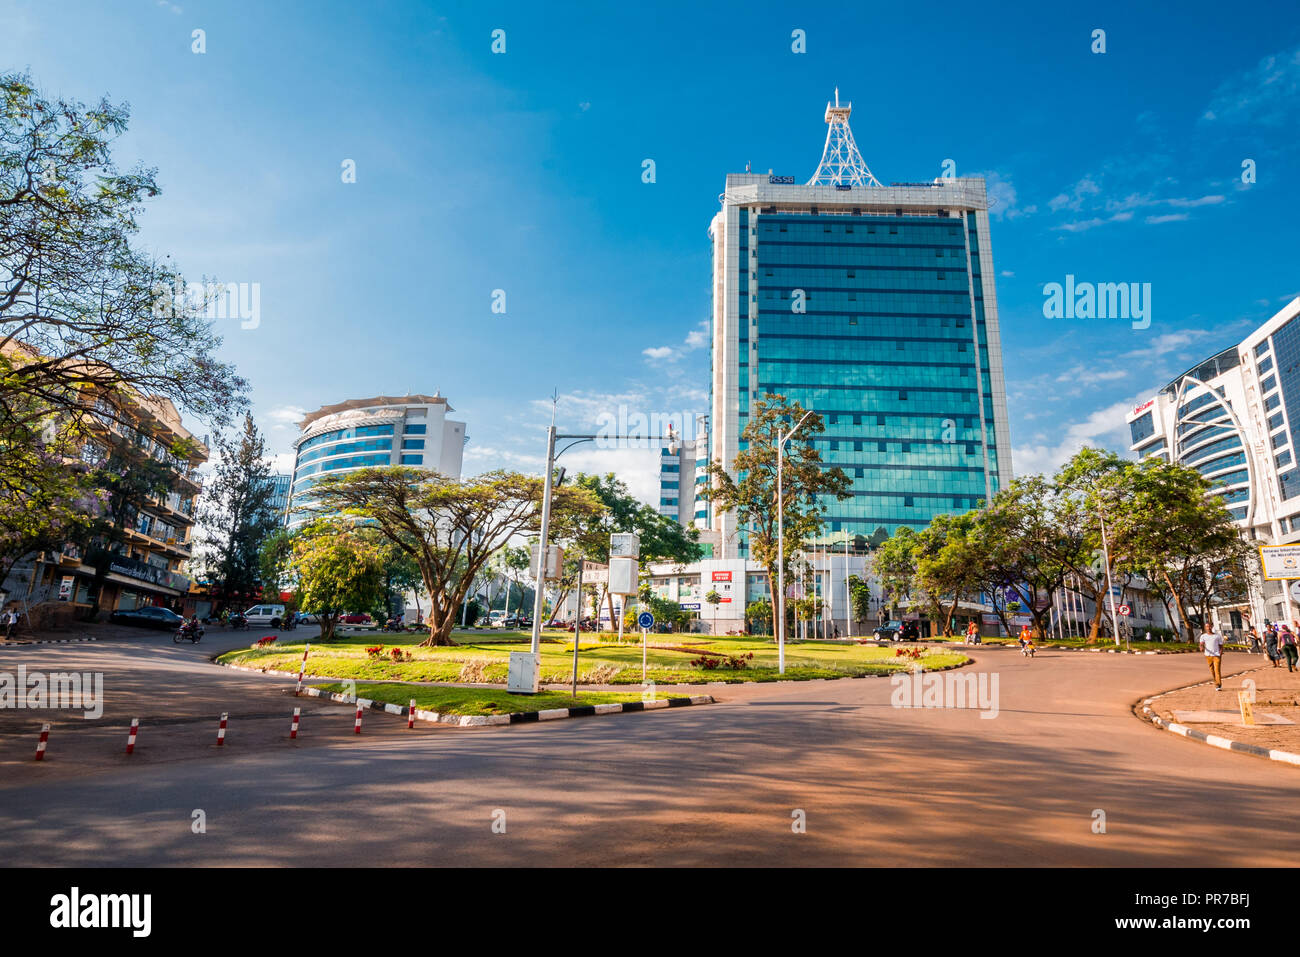 Kigali, Rwanda - September 21, 2018: Pension Plaza and surrounding buildings at the city centre roundabout Stock Photo